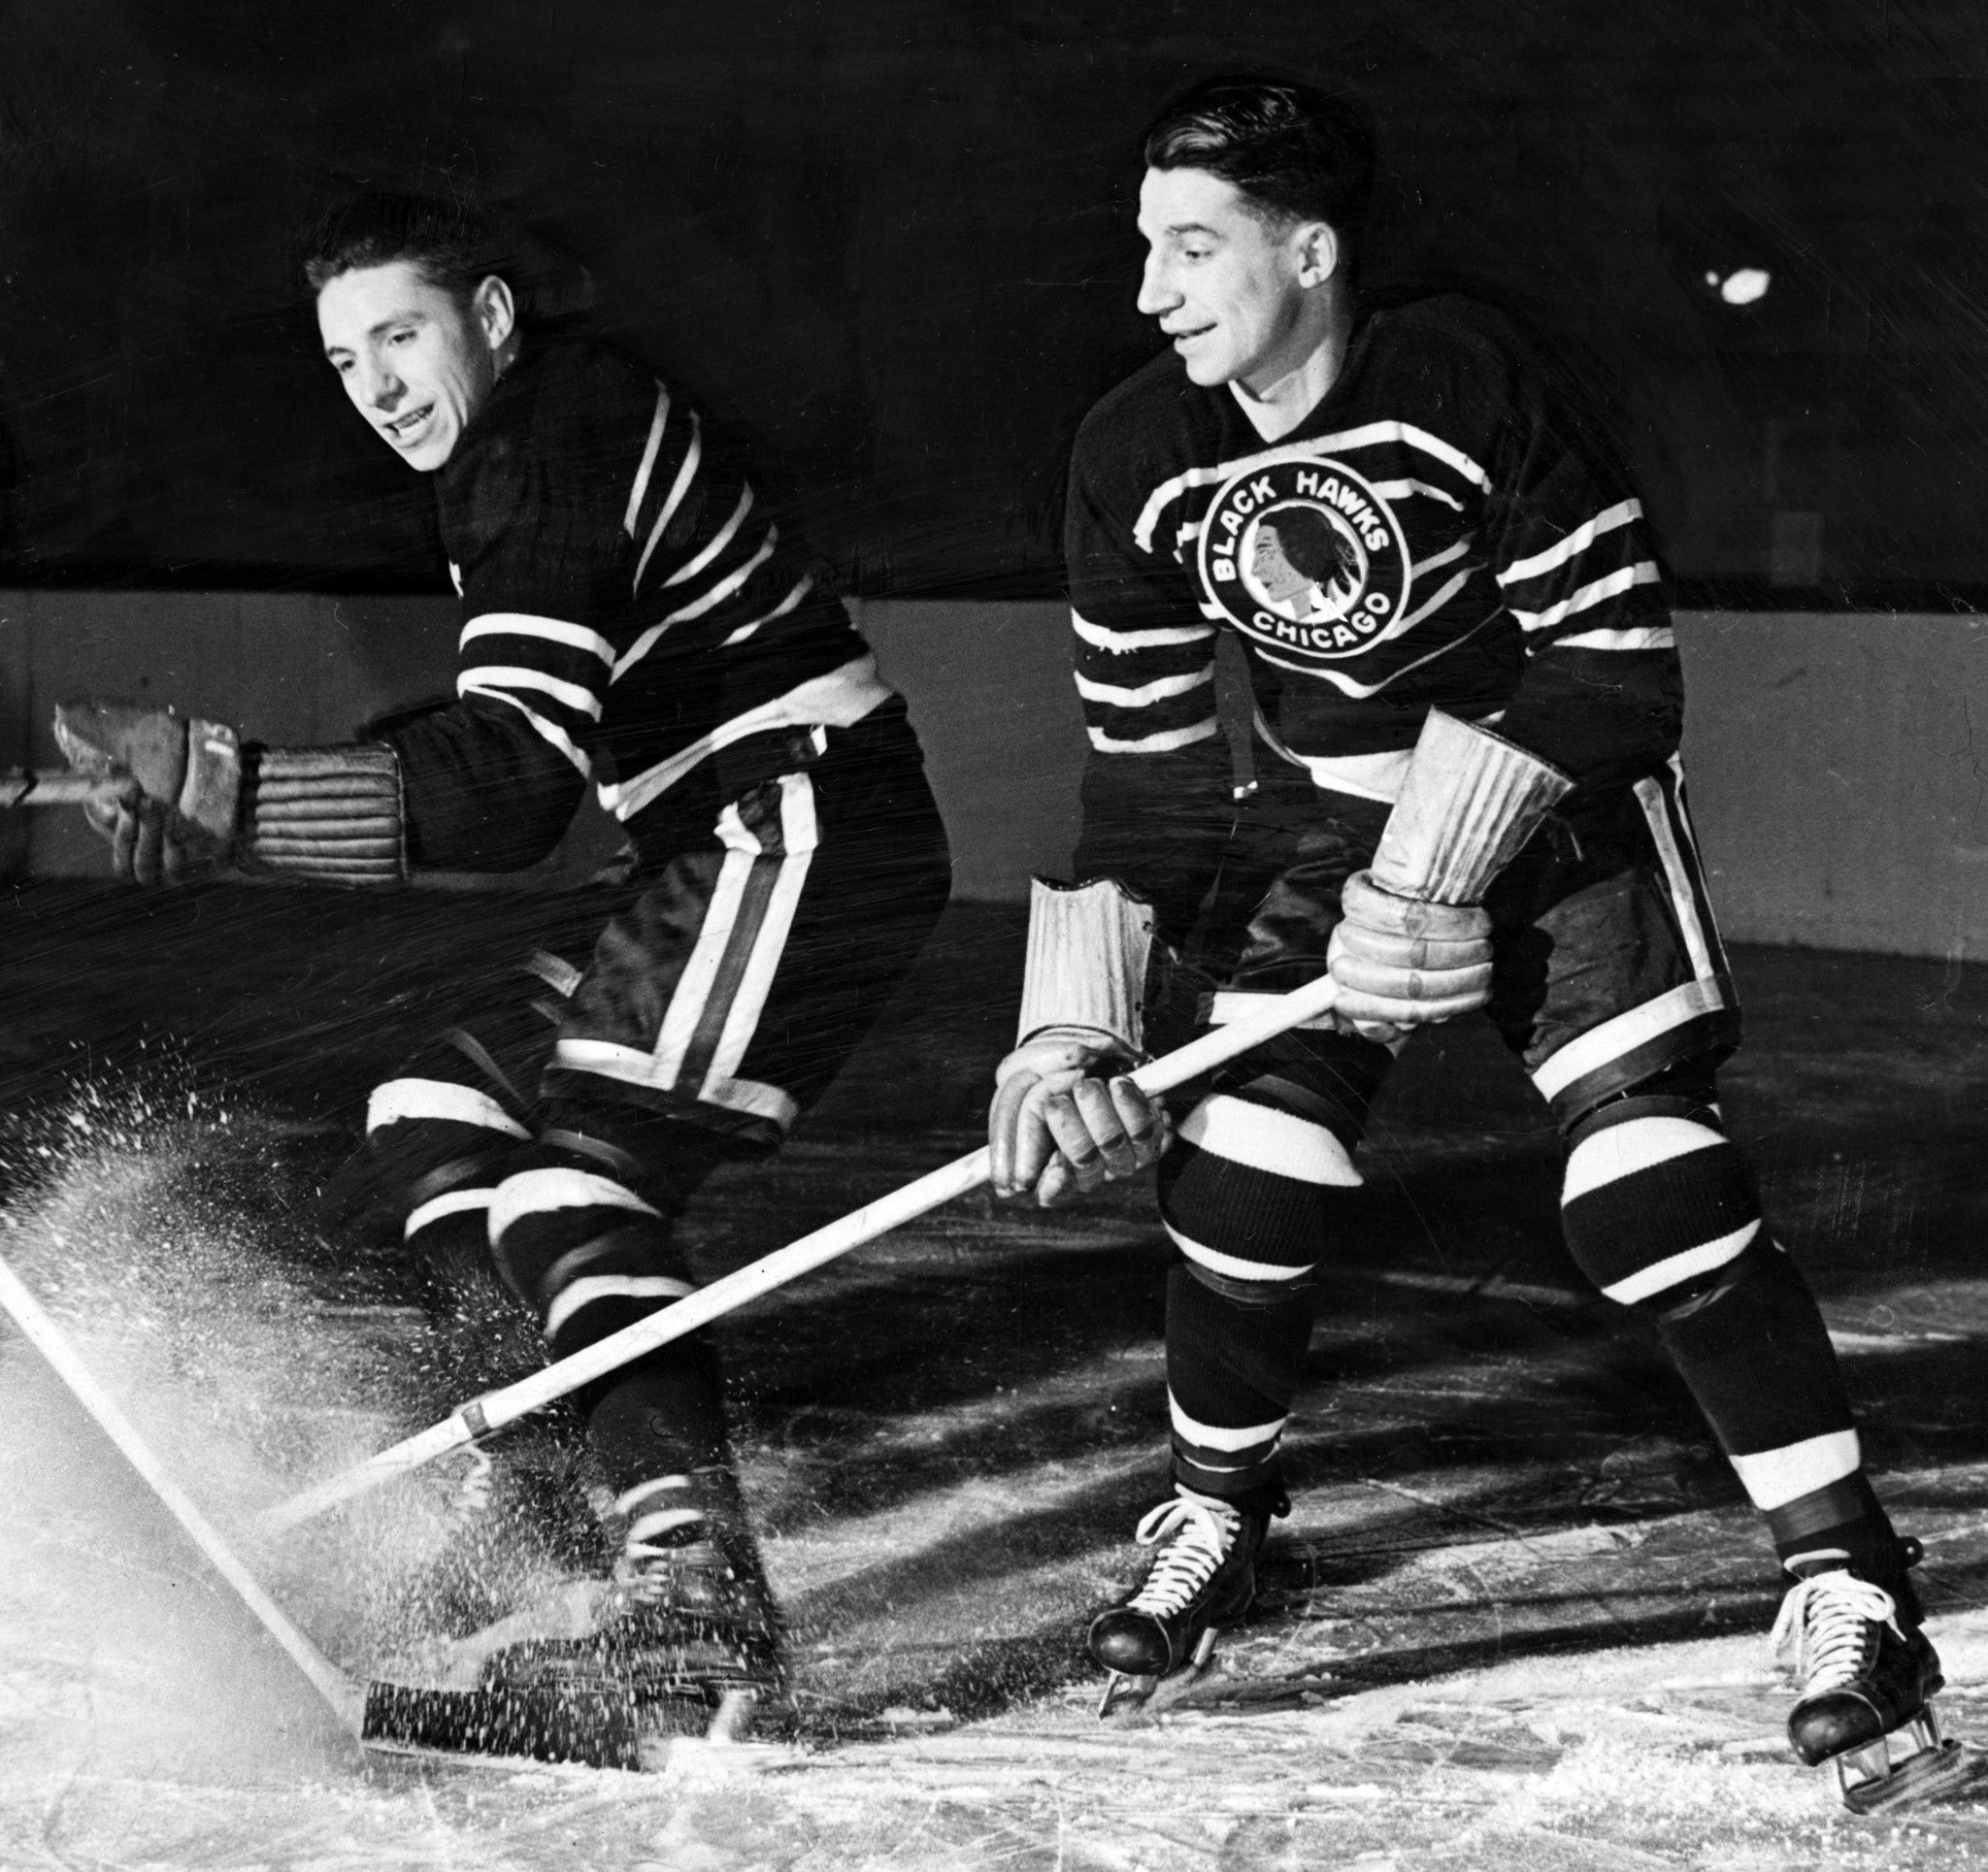 Chicago 1934 Hockey Jersey Black